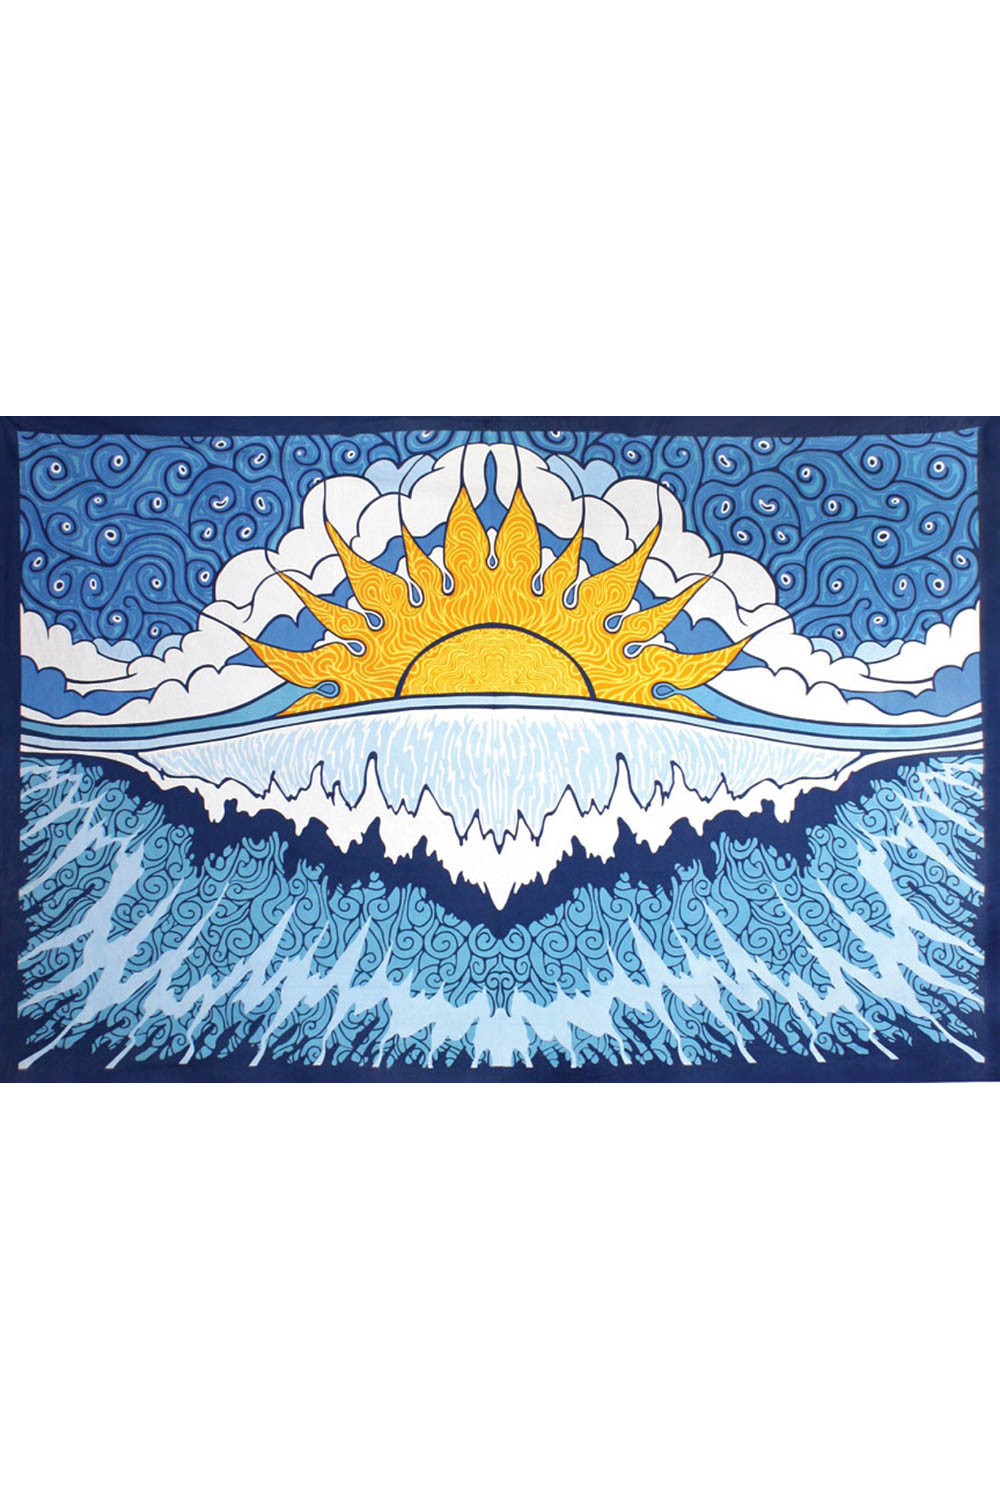 Sun Wave Tapestry 60x90 - Art by Chris Pinkerton